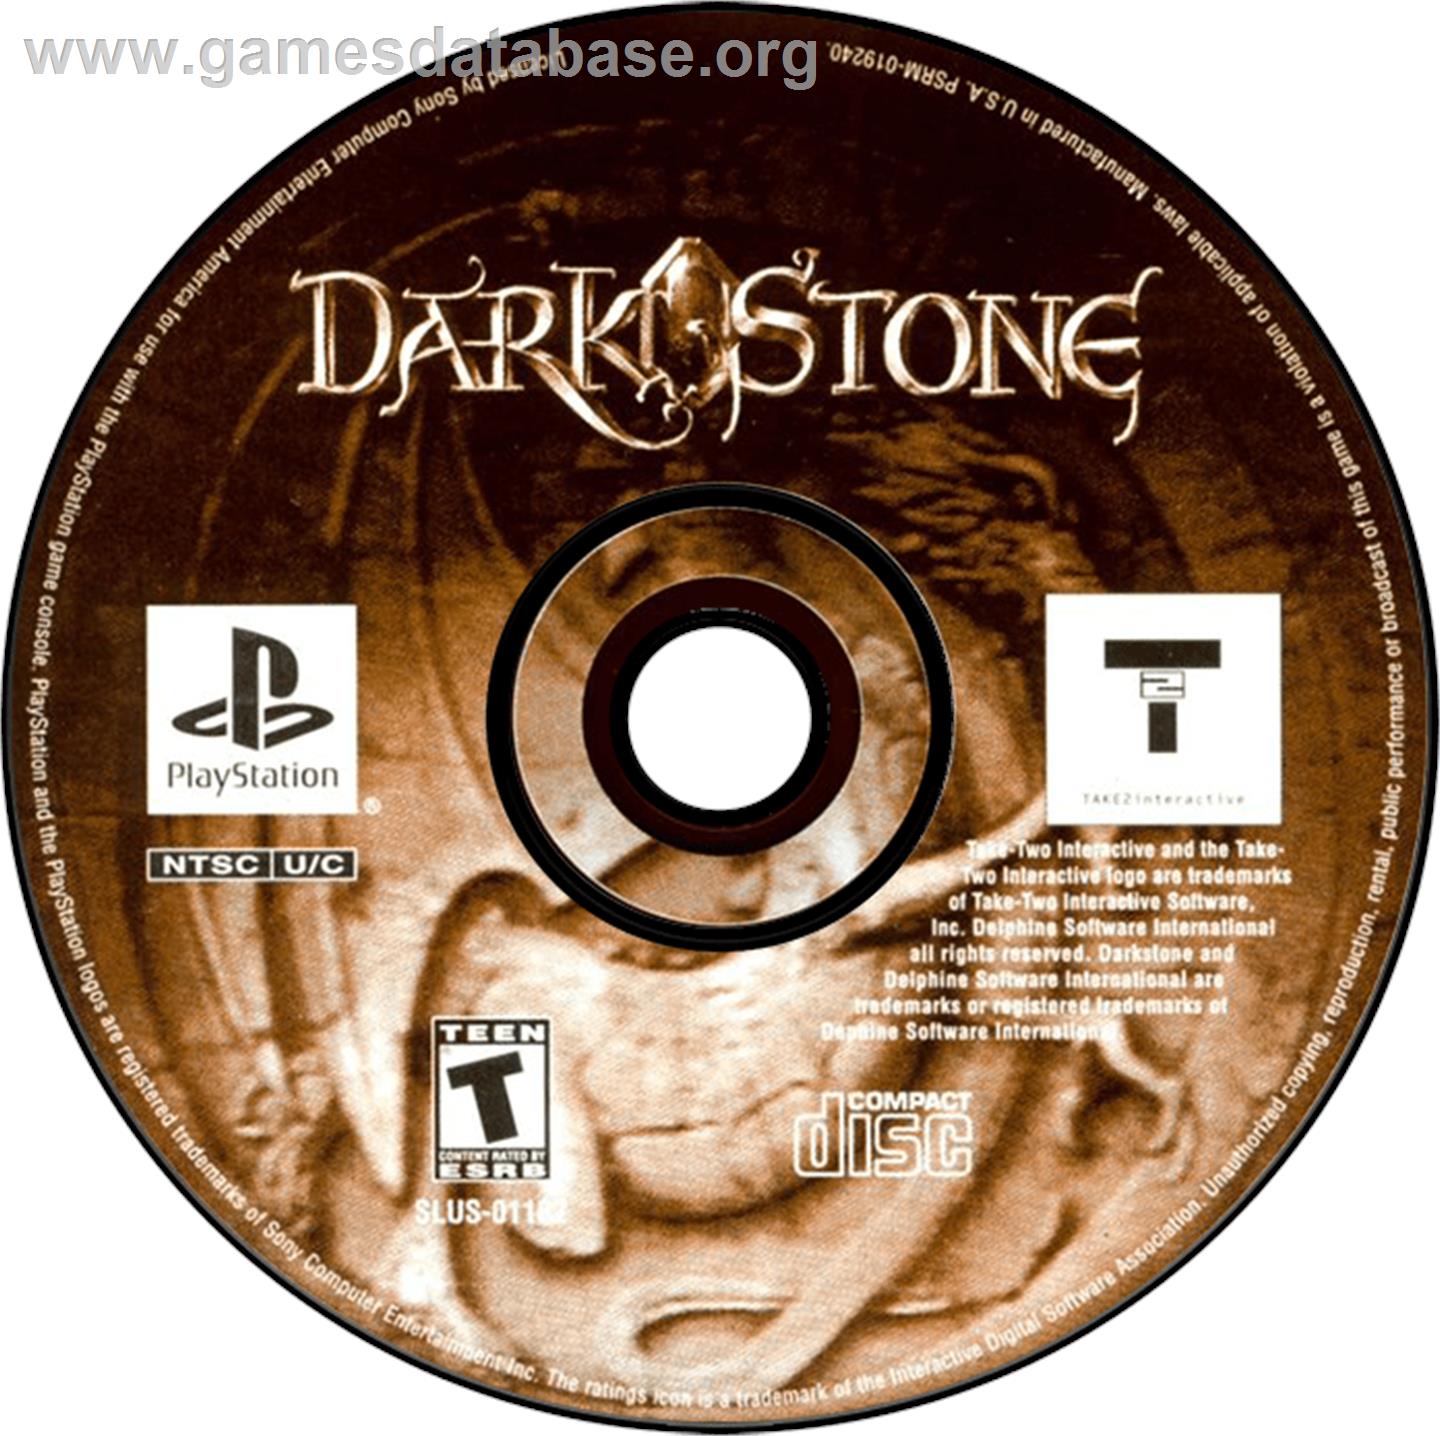 Darkstone - Sony Playstation - Artwork - Disc